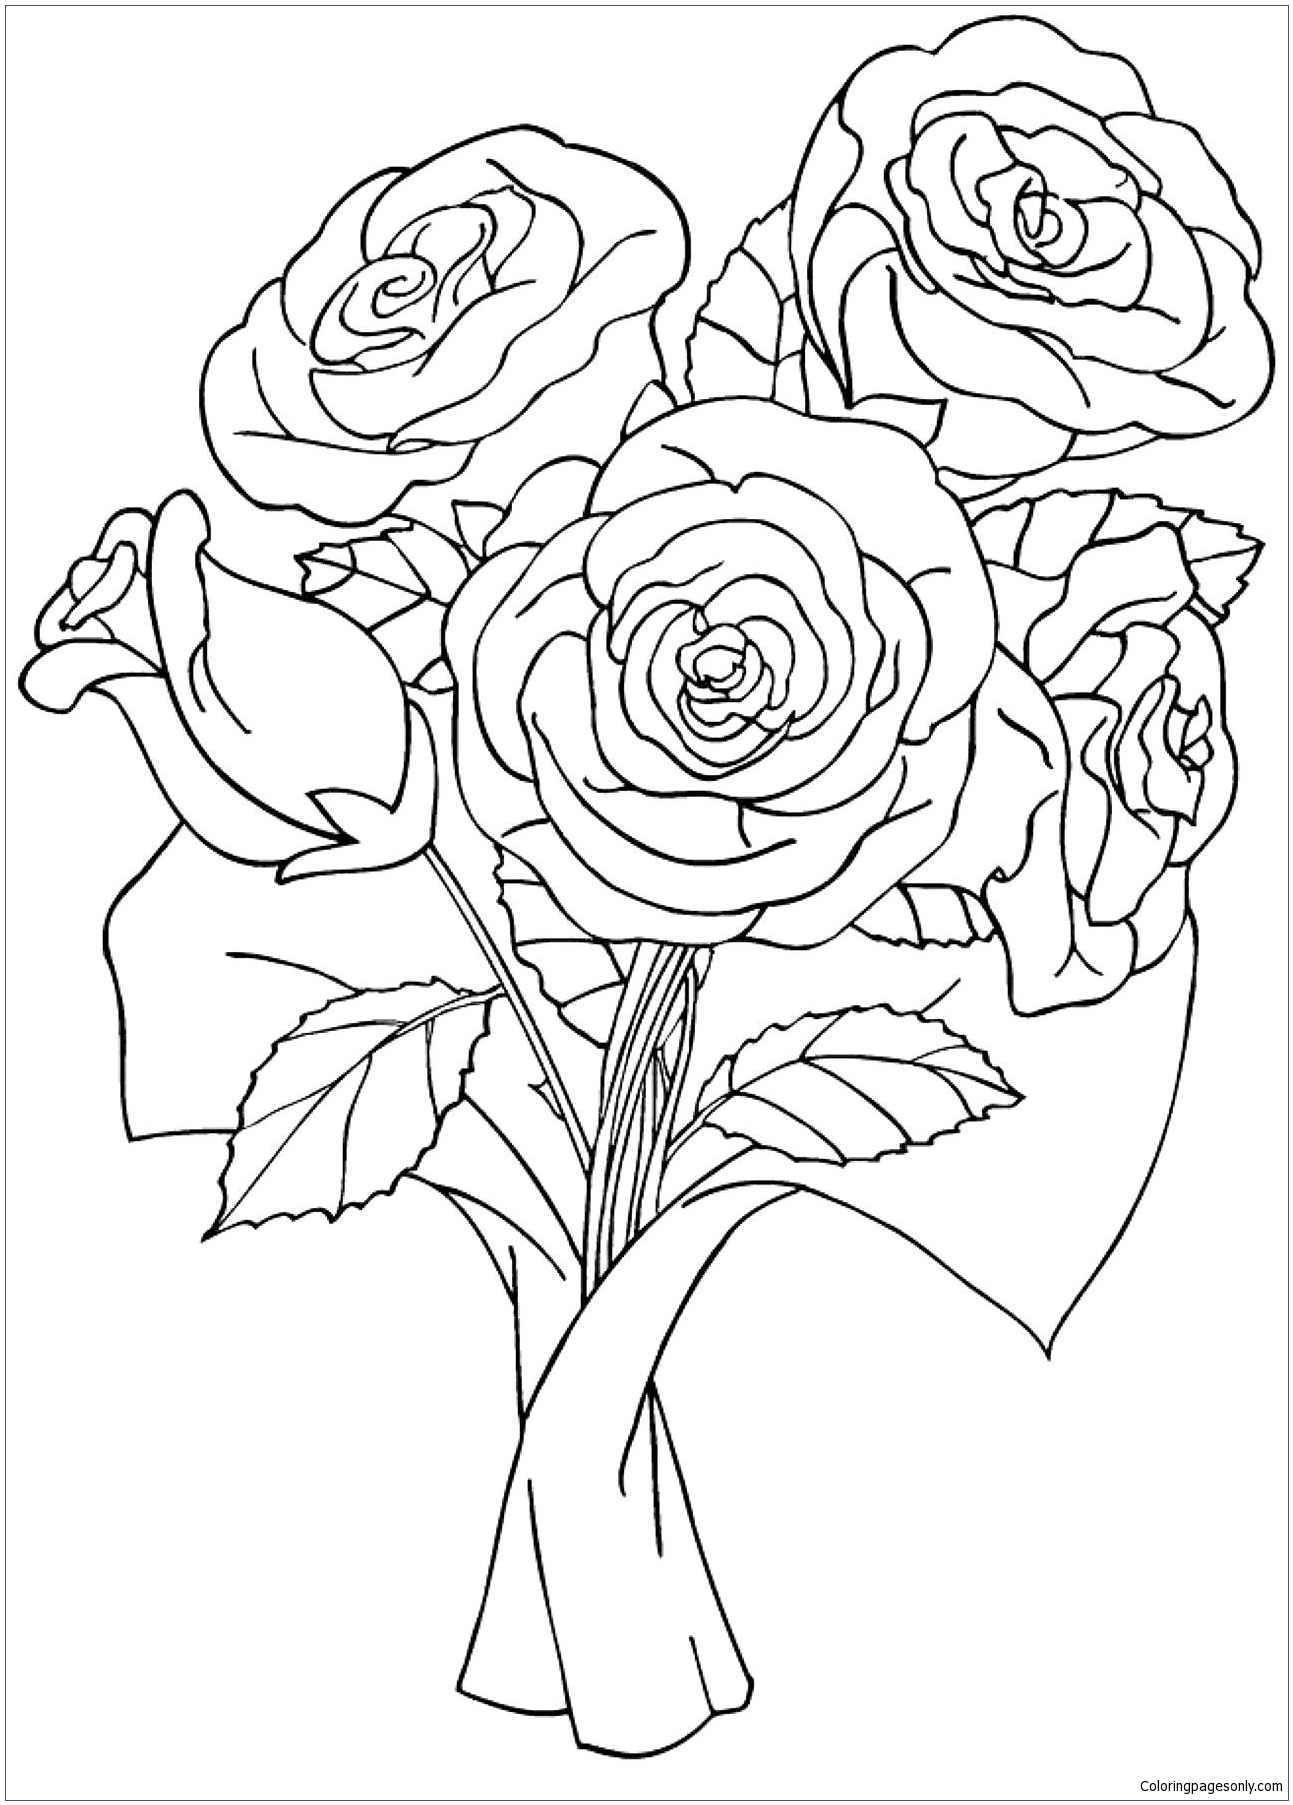 Roses Flower Coloring Pages - Flower Coloring Pages - Free ...